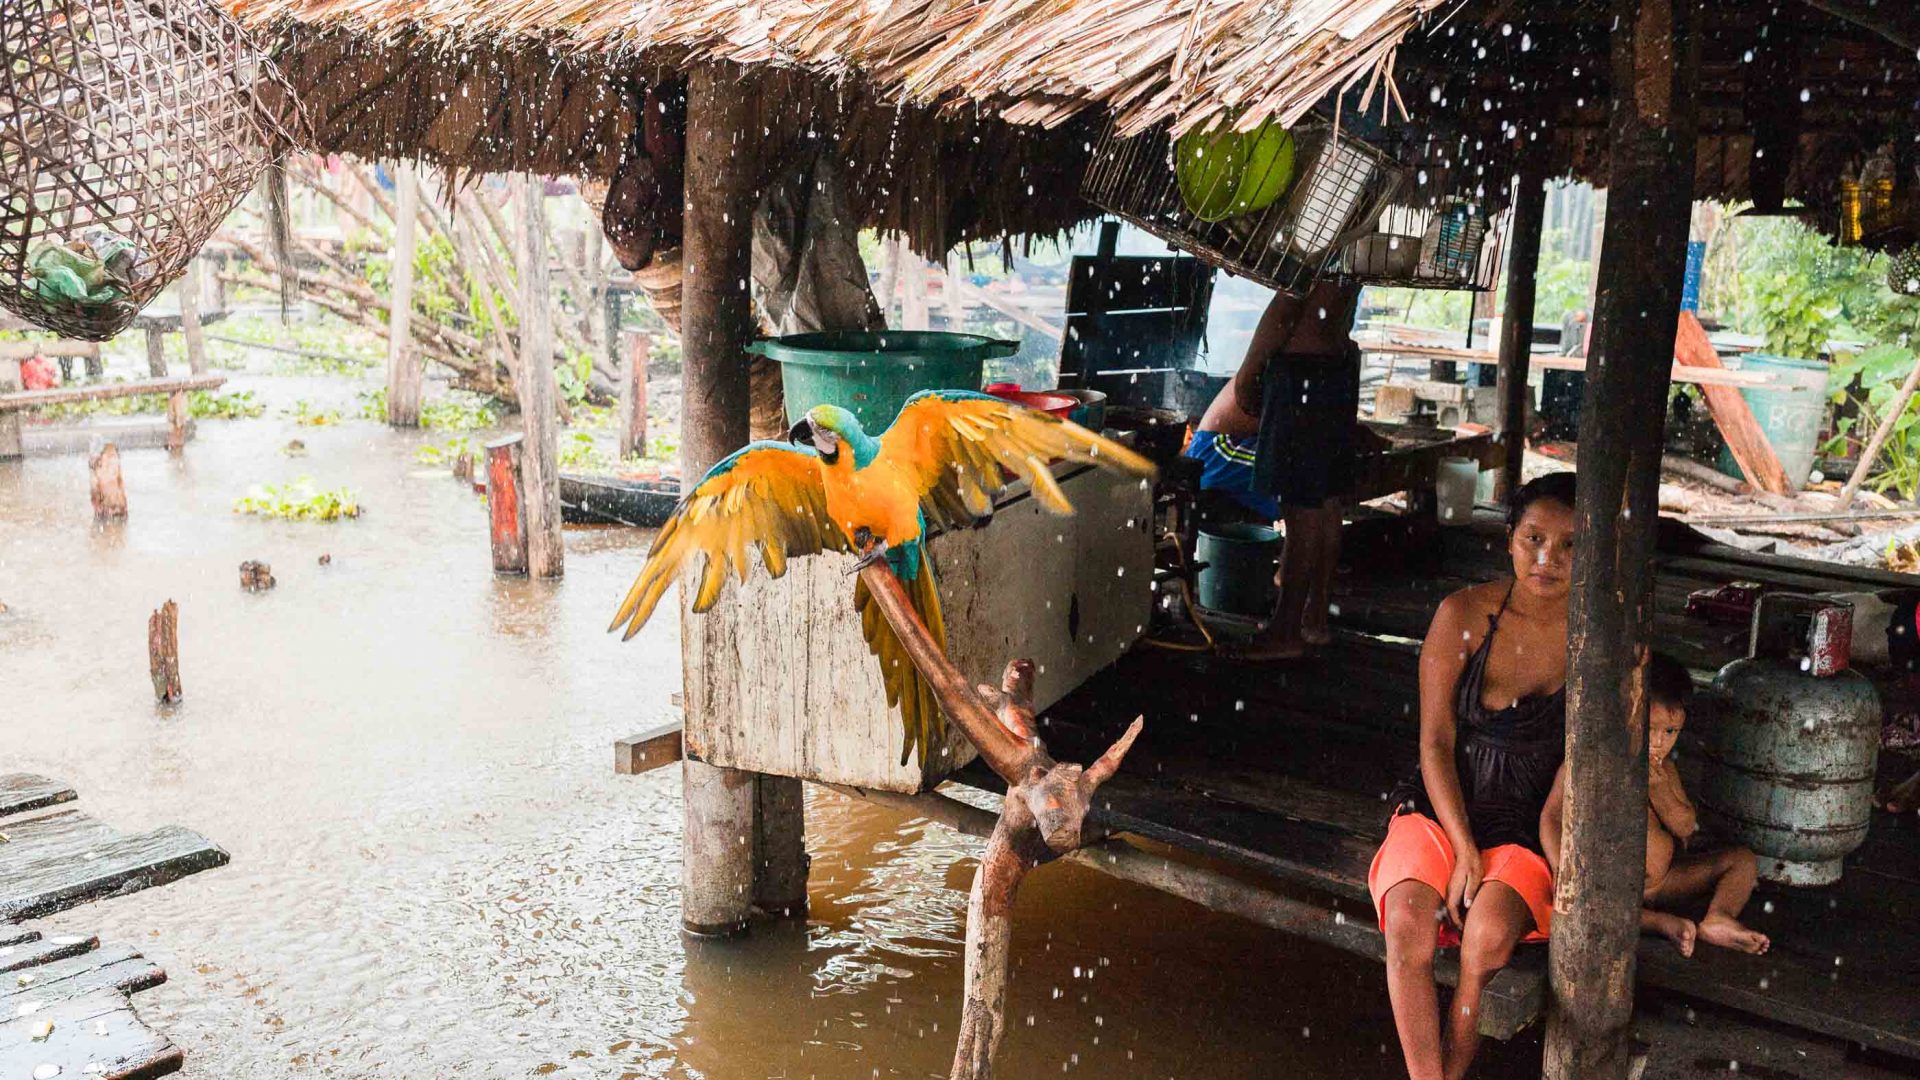 A macaw bathes in rainwater in the Venezuelan Delta.